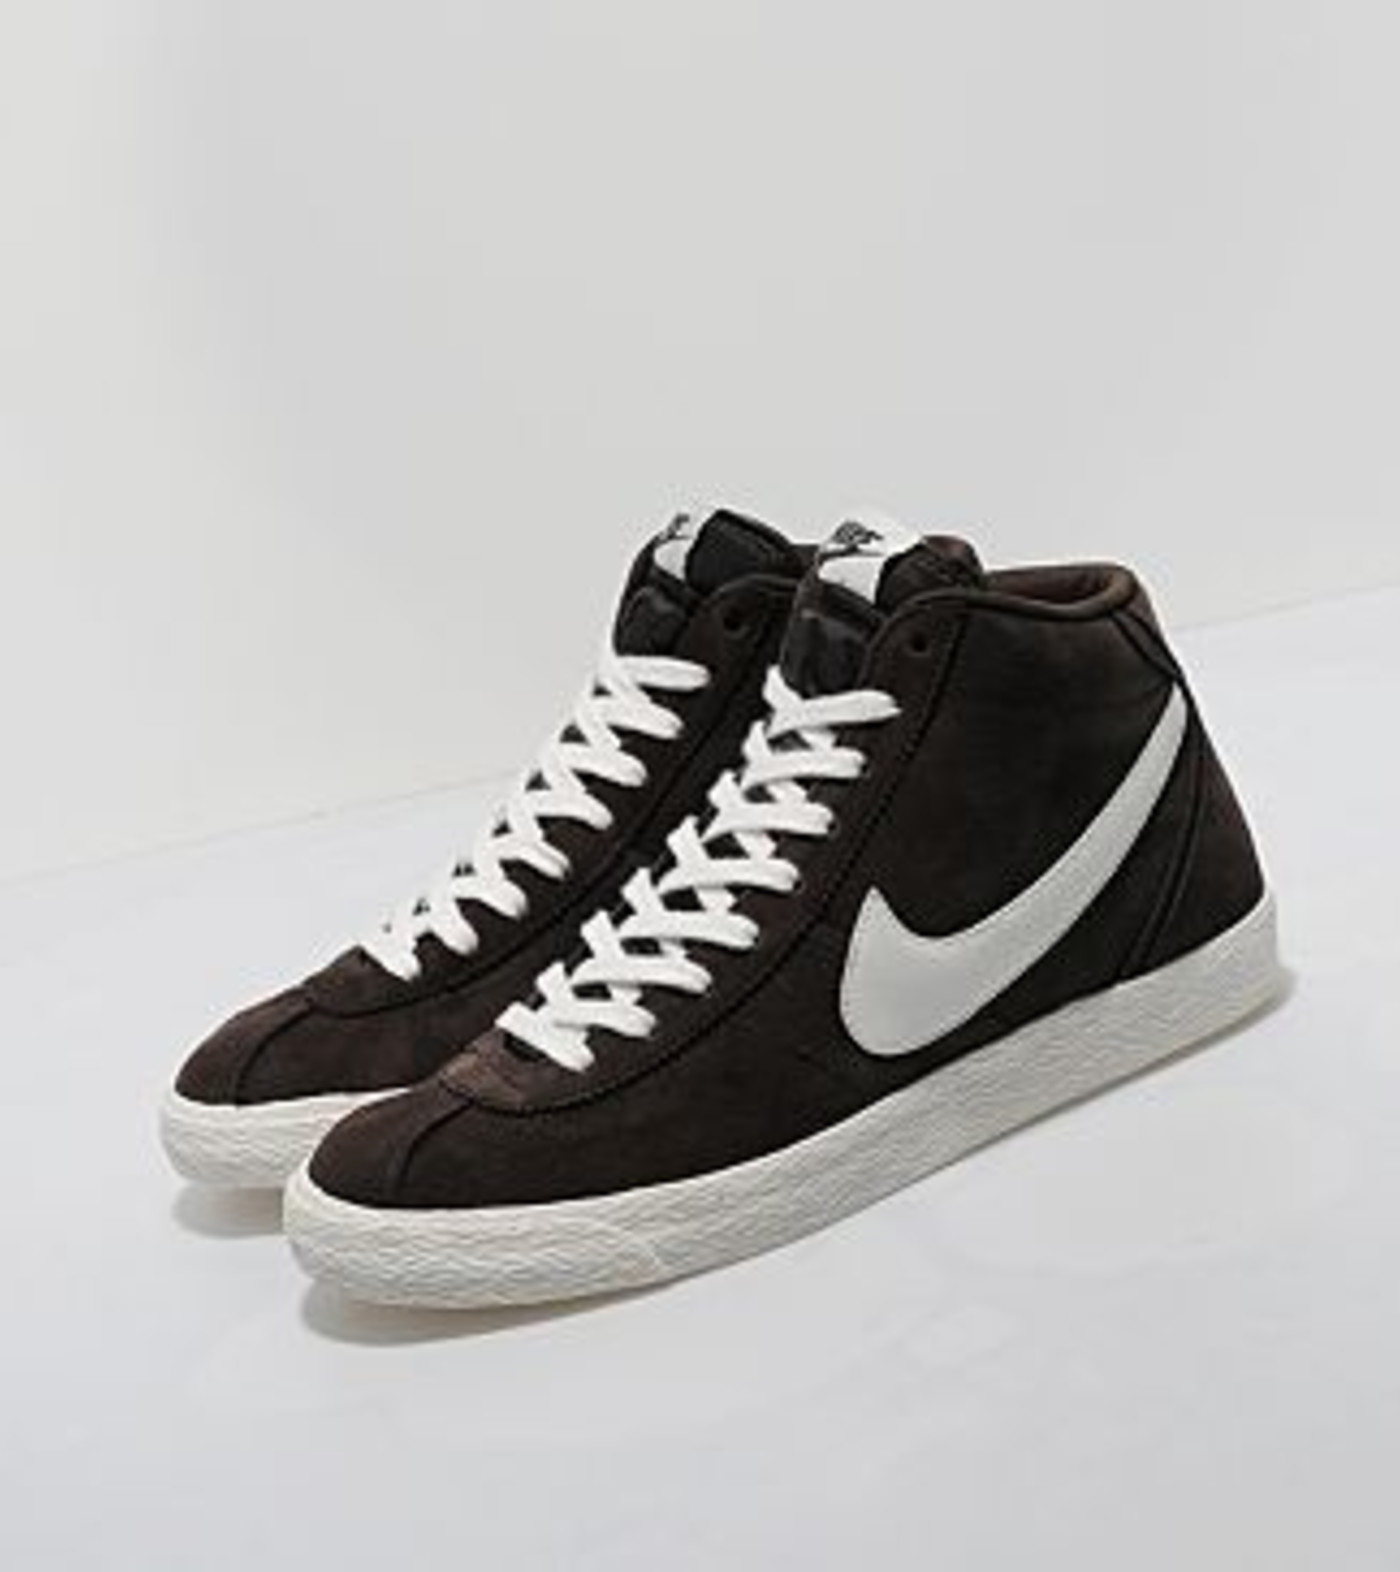 Nike Bruin Mid “Brown/White” | Complex